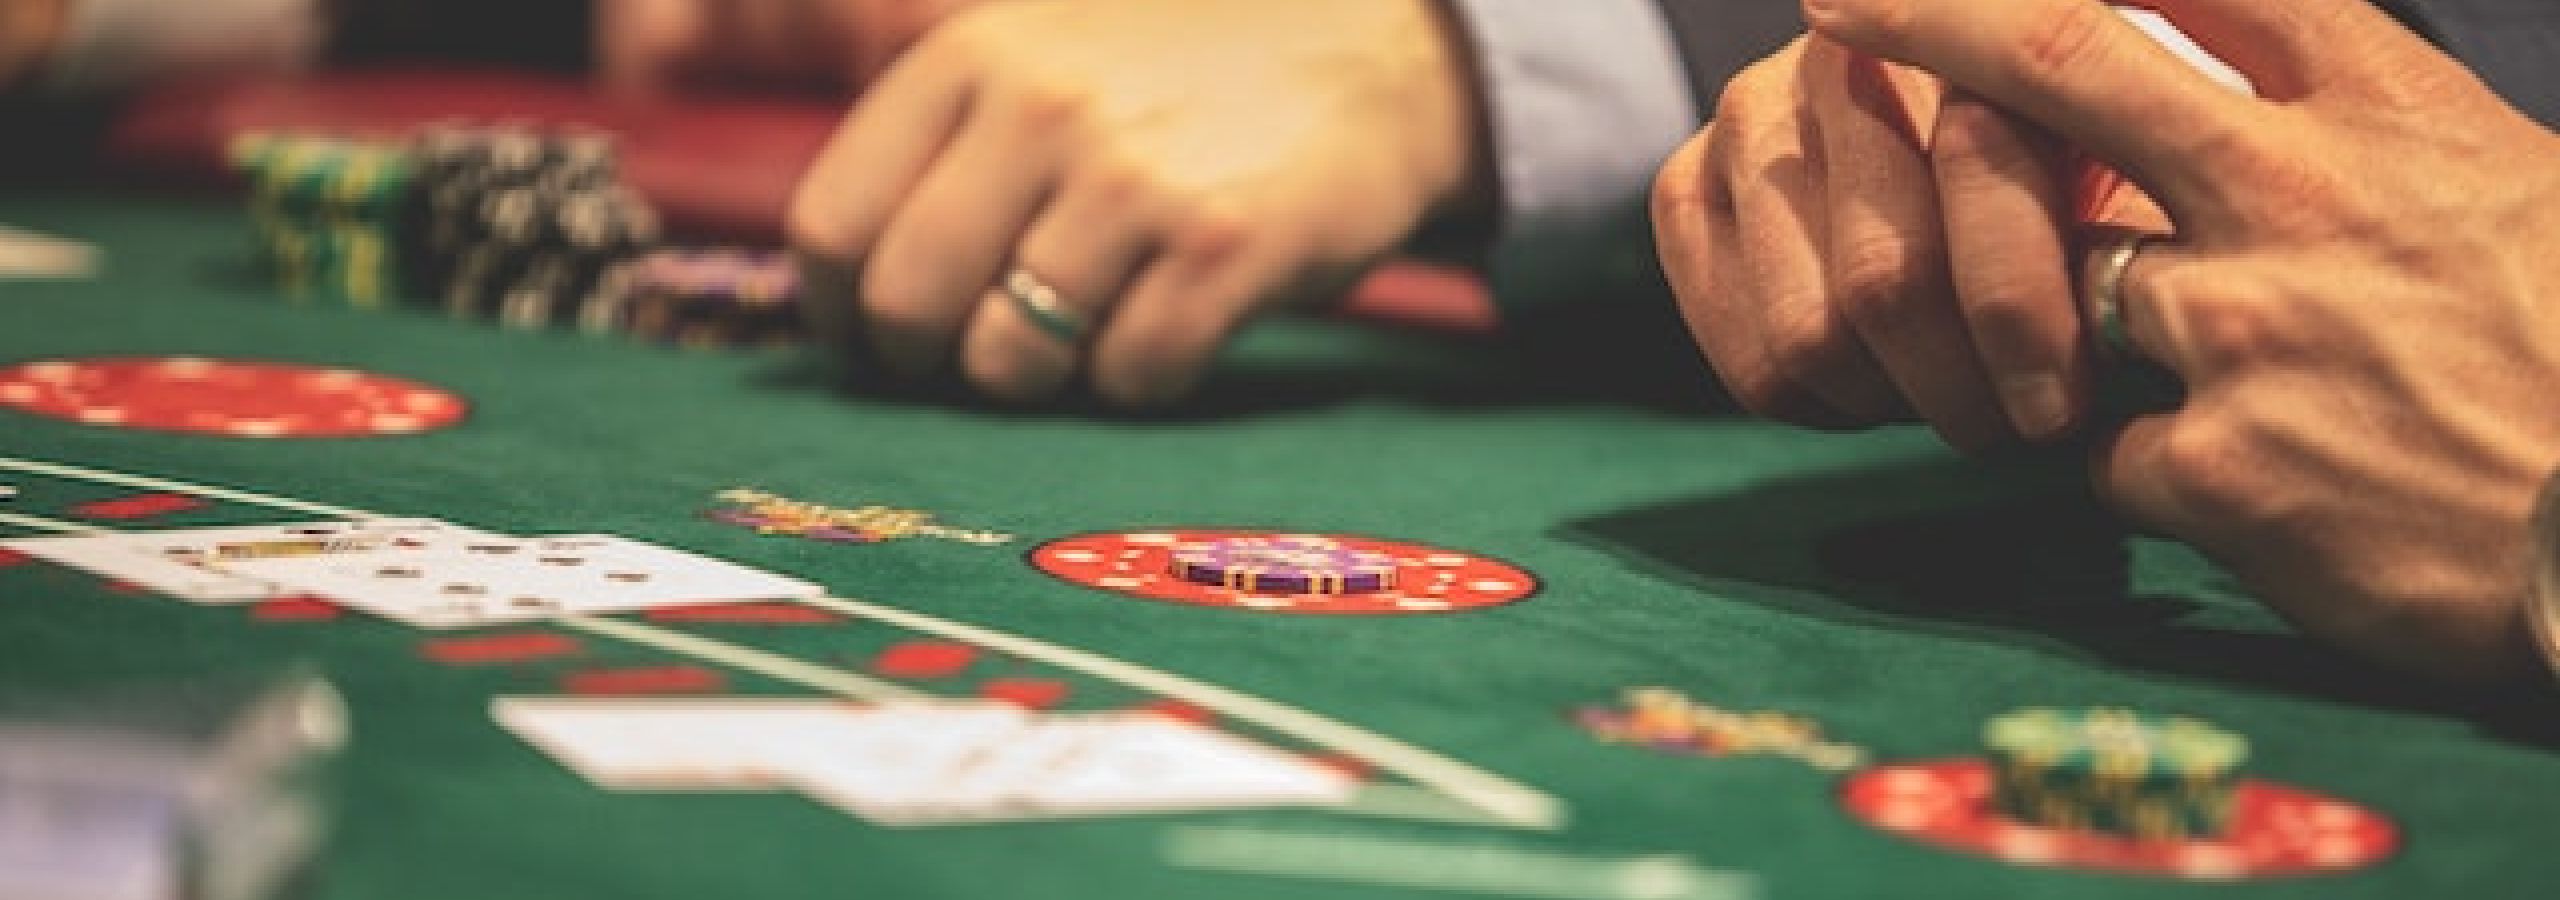 photo of blackjack game at casino